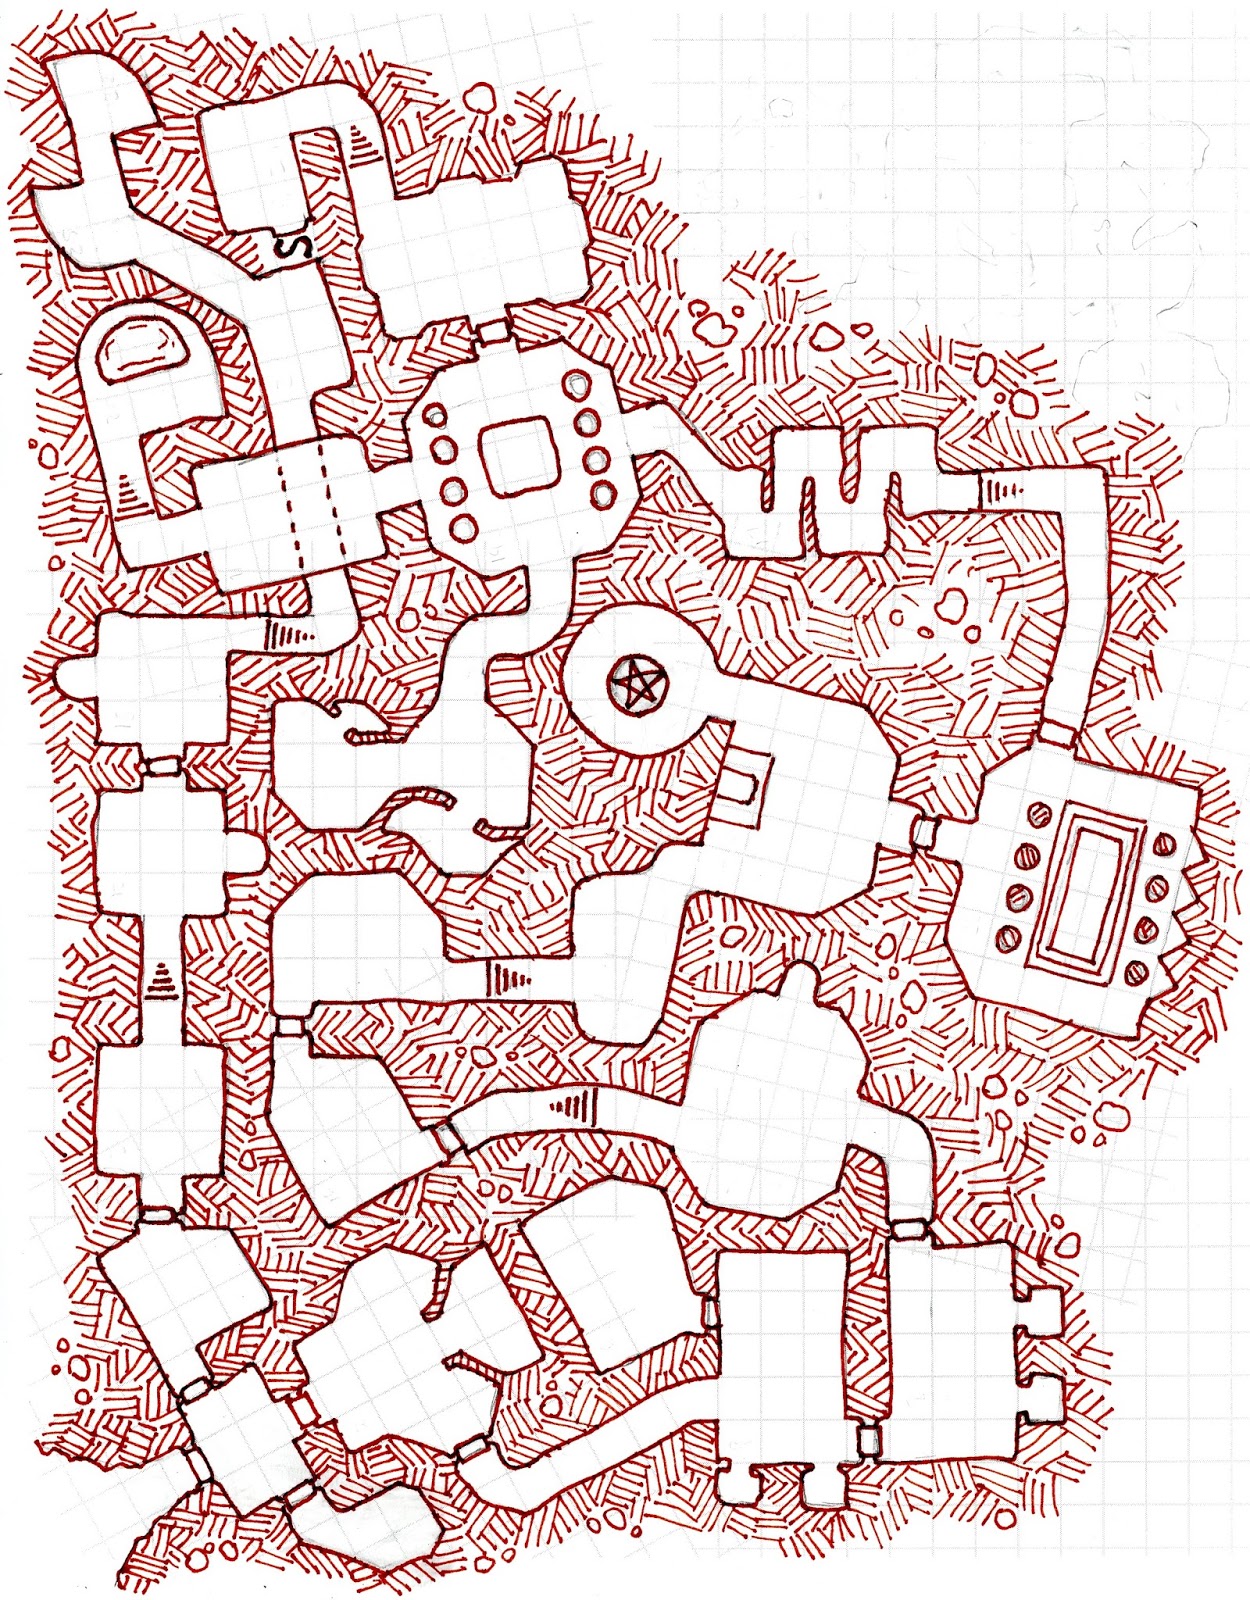 dnd-maps-old-school-dungeon-map-gambaran